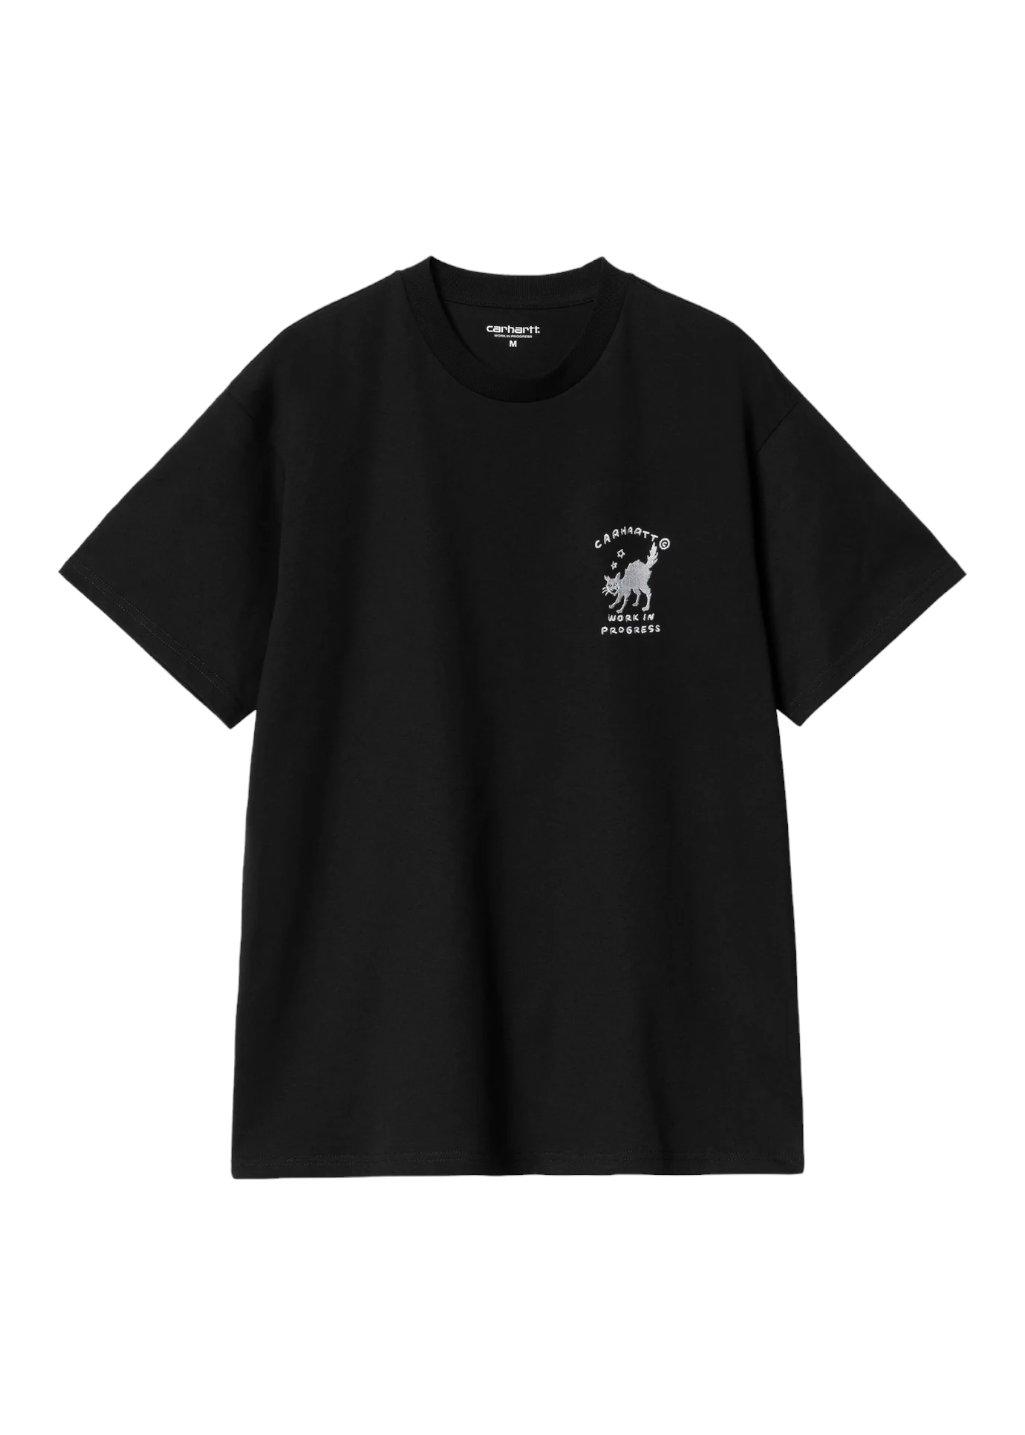 Carhartt WIP - S/S Icons T-Shirt - Black/White - Hardpressed Print Studio Inc.